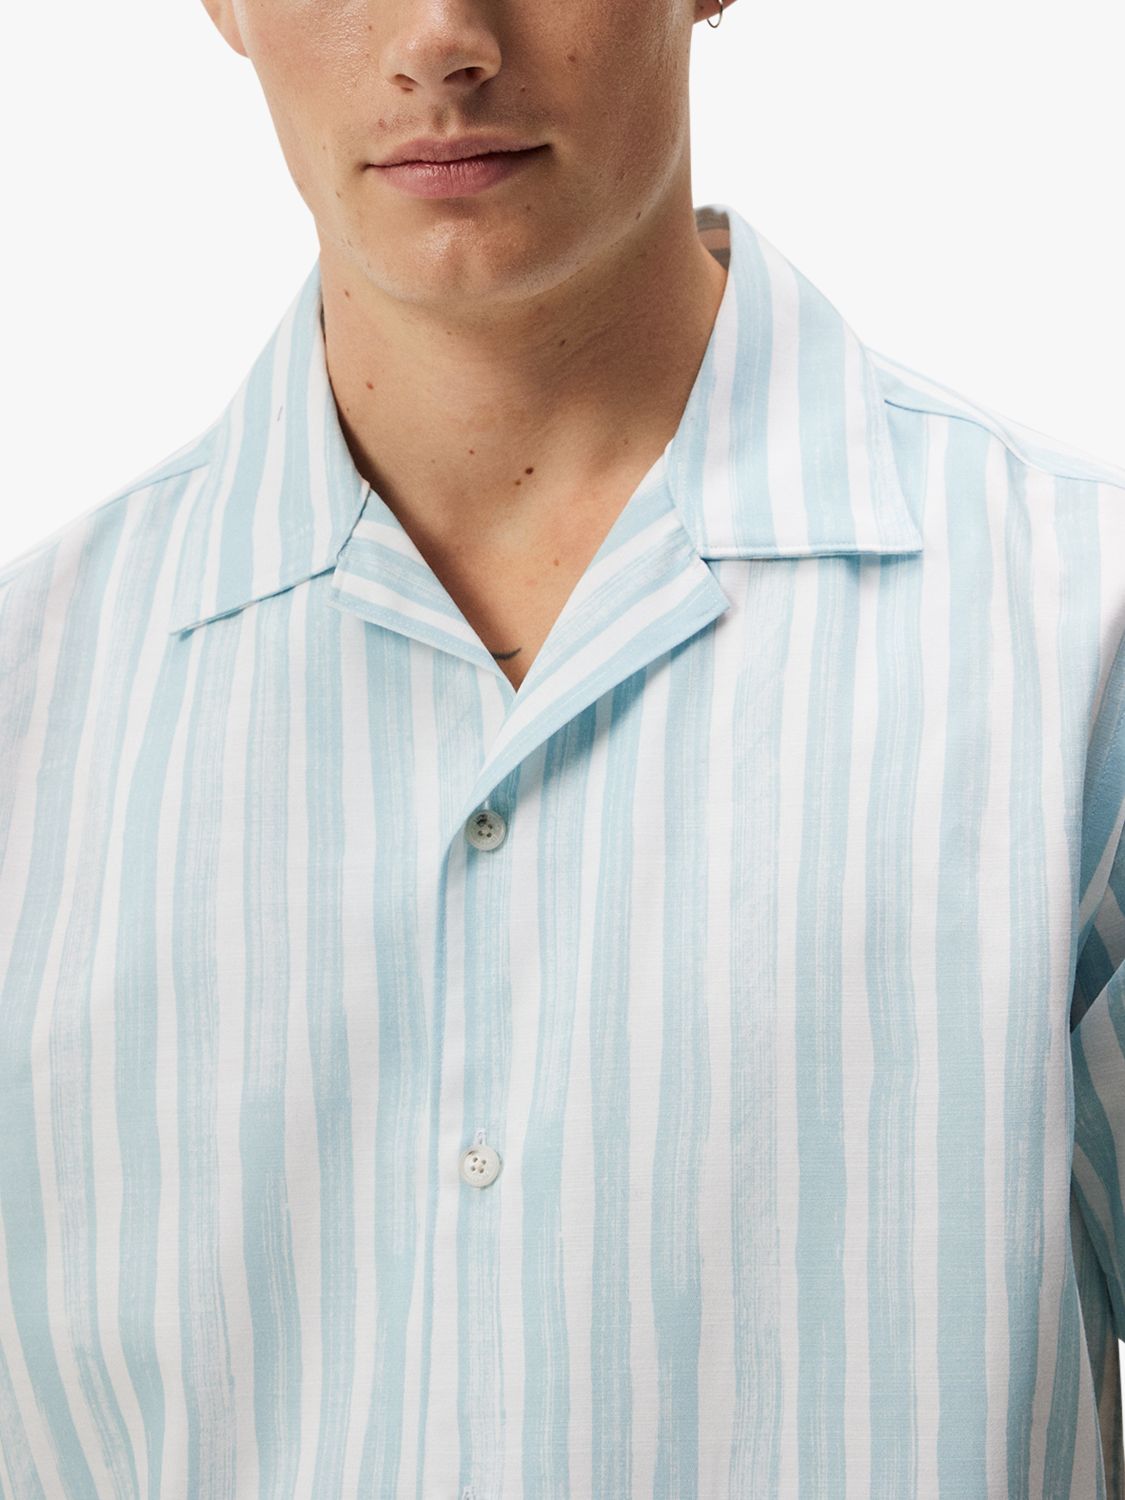 J.Lindeberg Elio Painted Stripe Regular Shirt, Blue/White, S